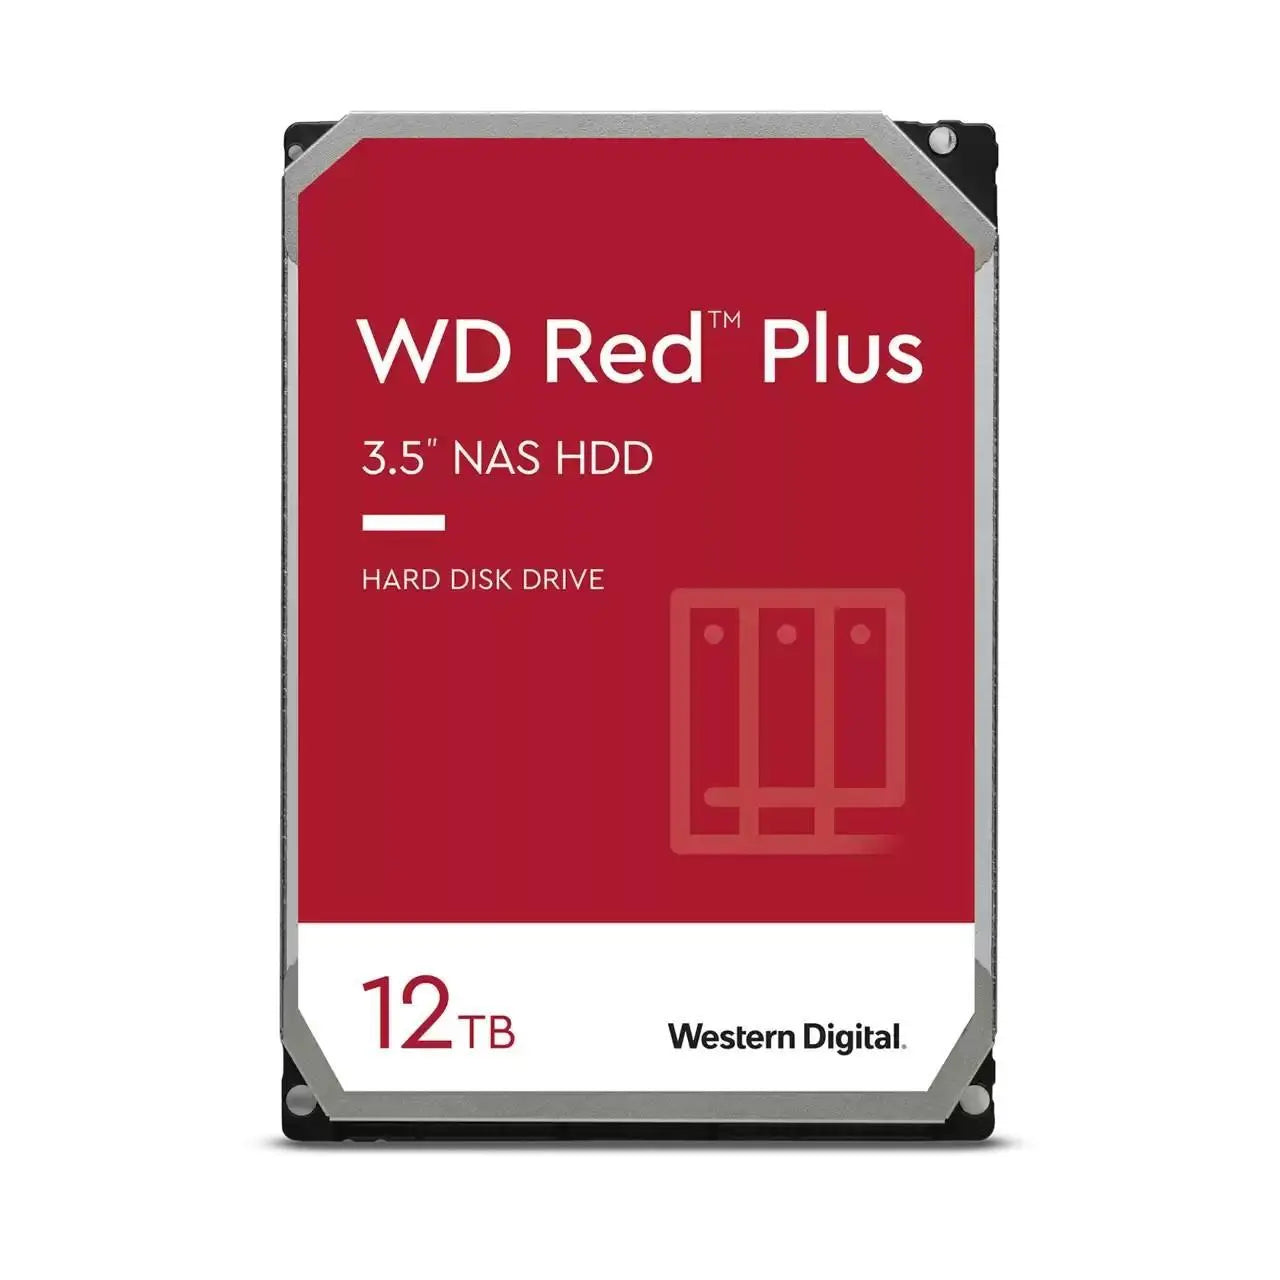 WD Red Plus NAS WD120EFBX 256MB 12TB Western Digital